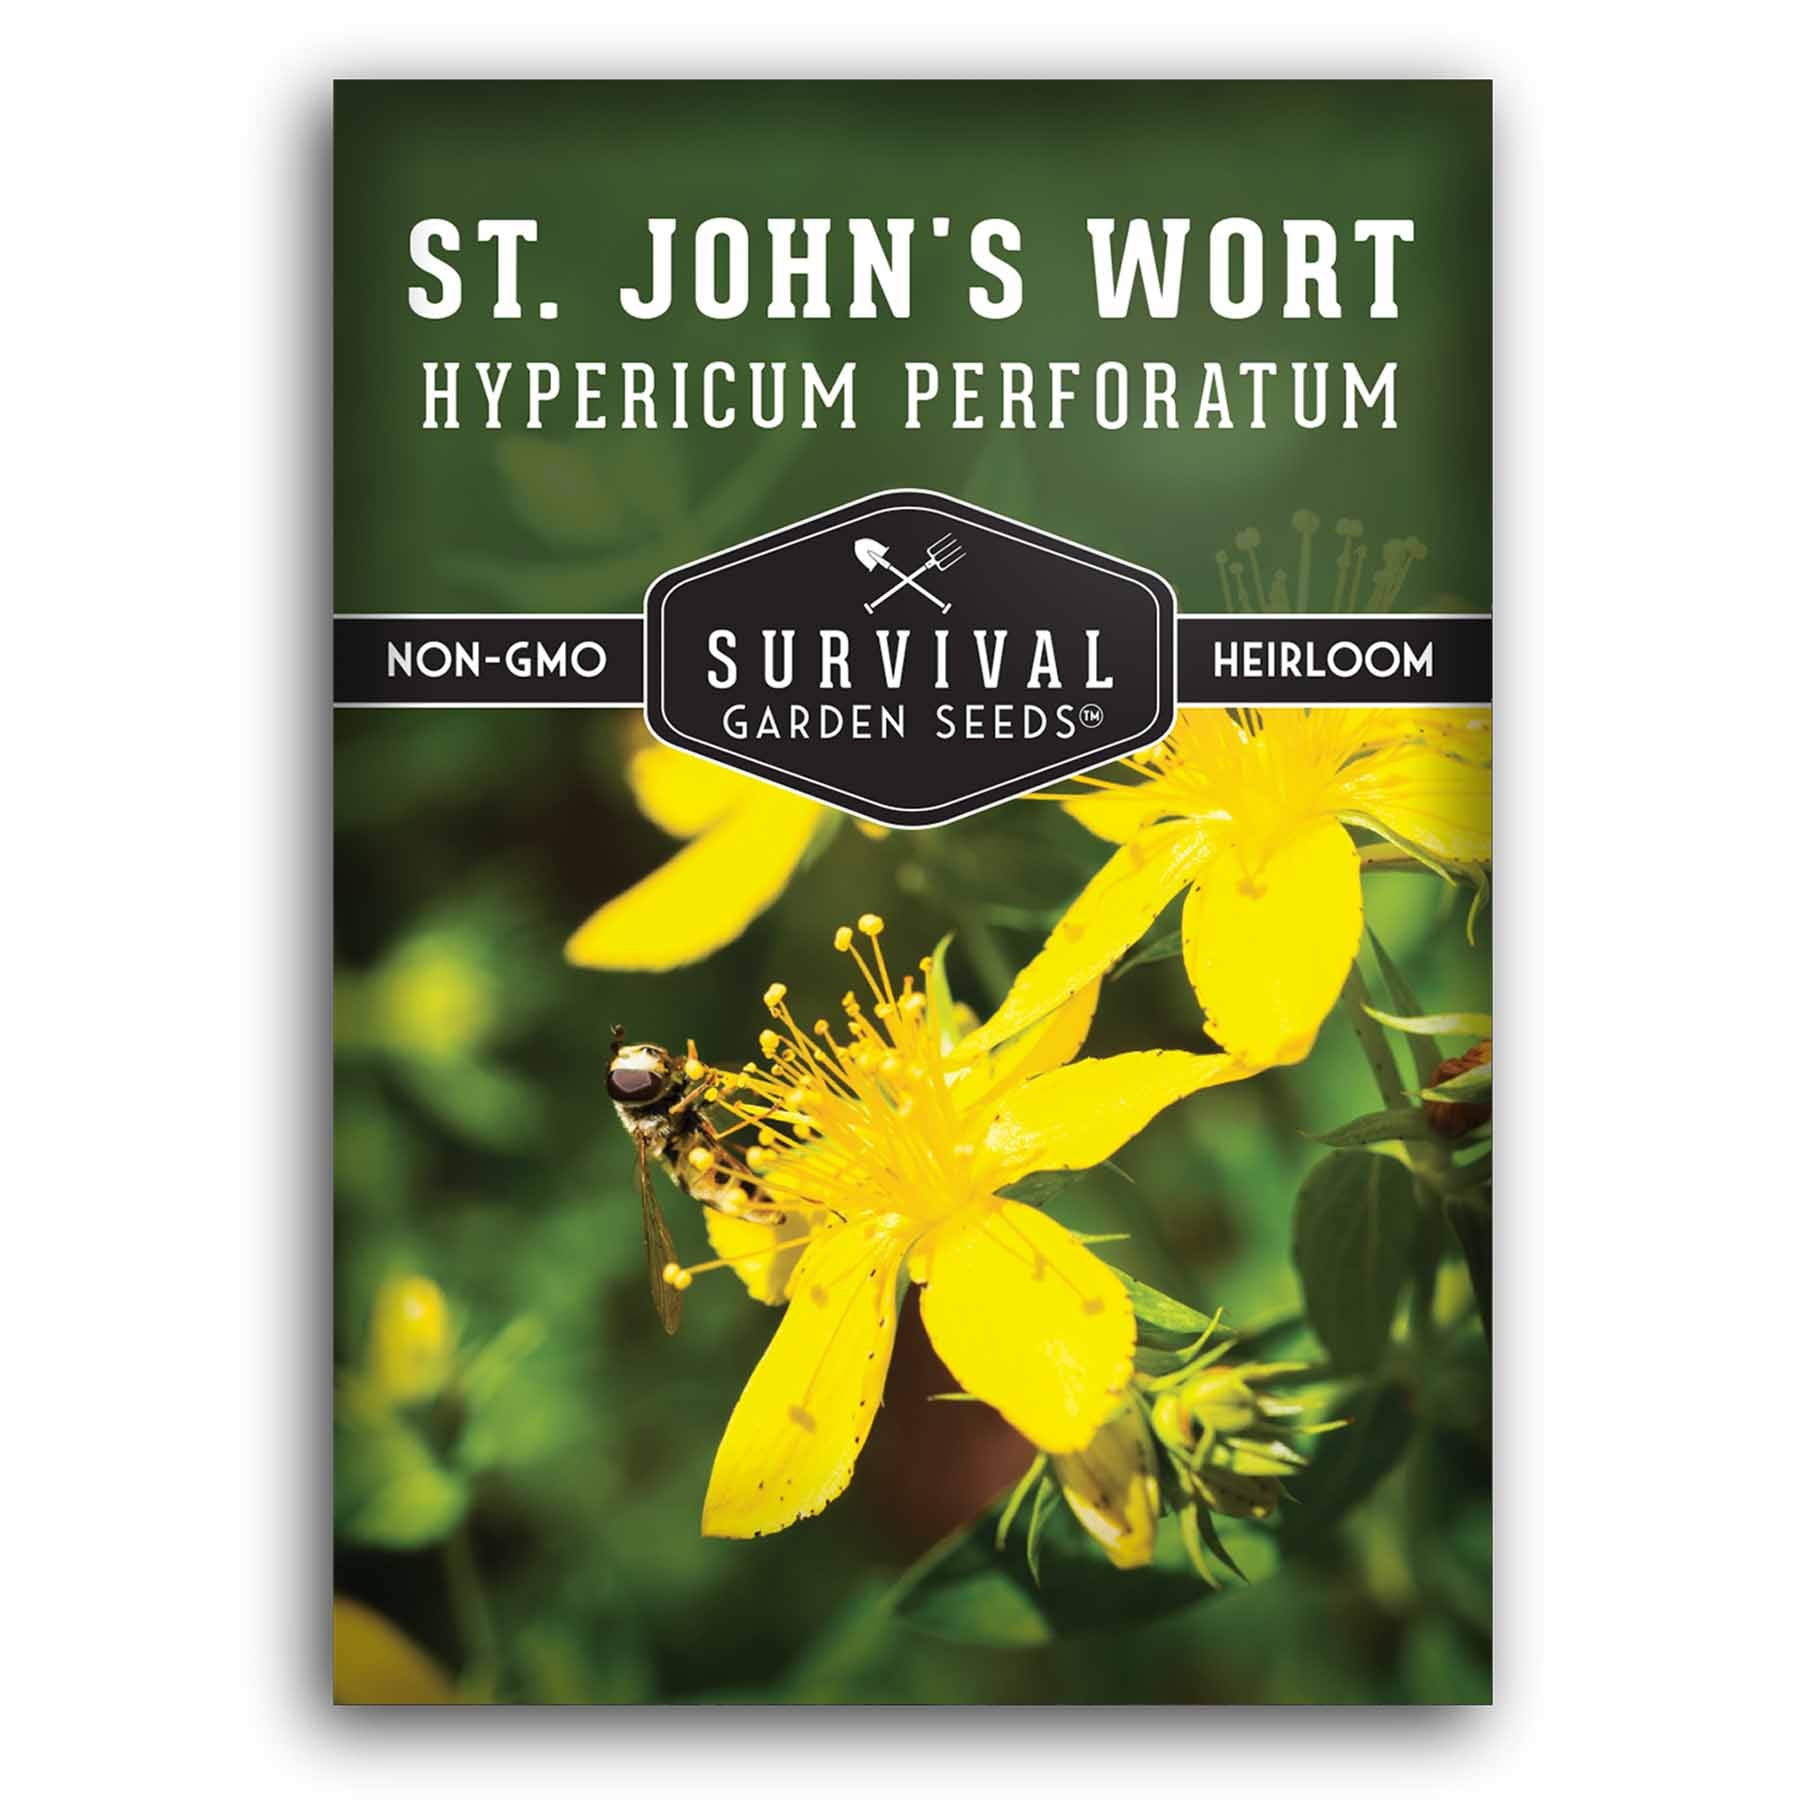 1 packet of St. John's Wort seeds